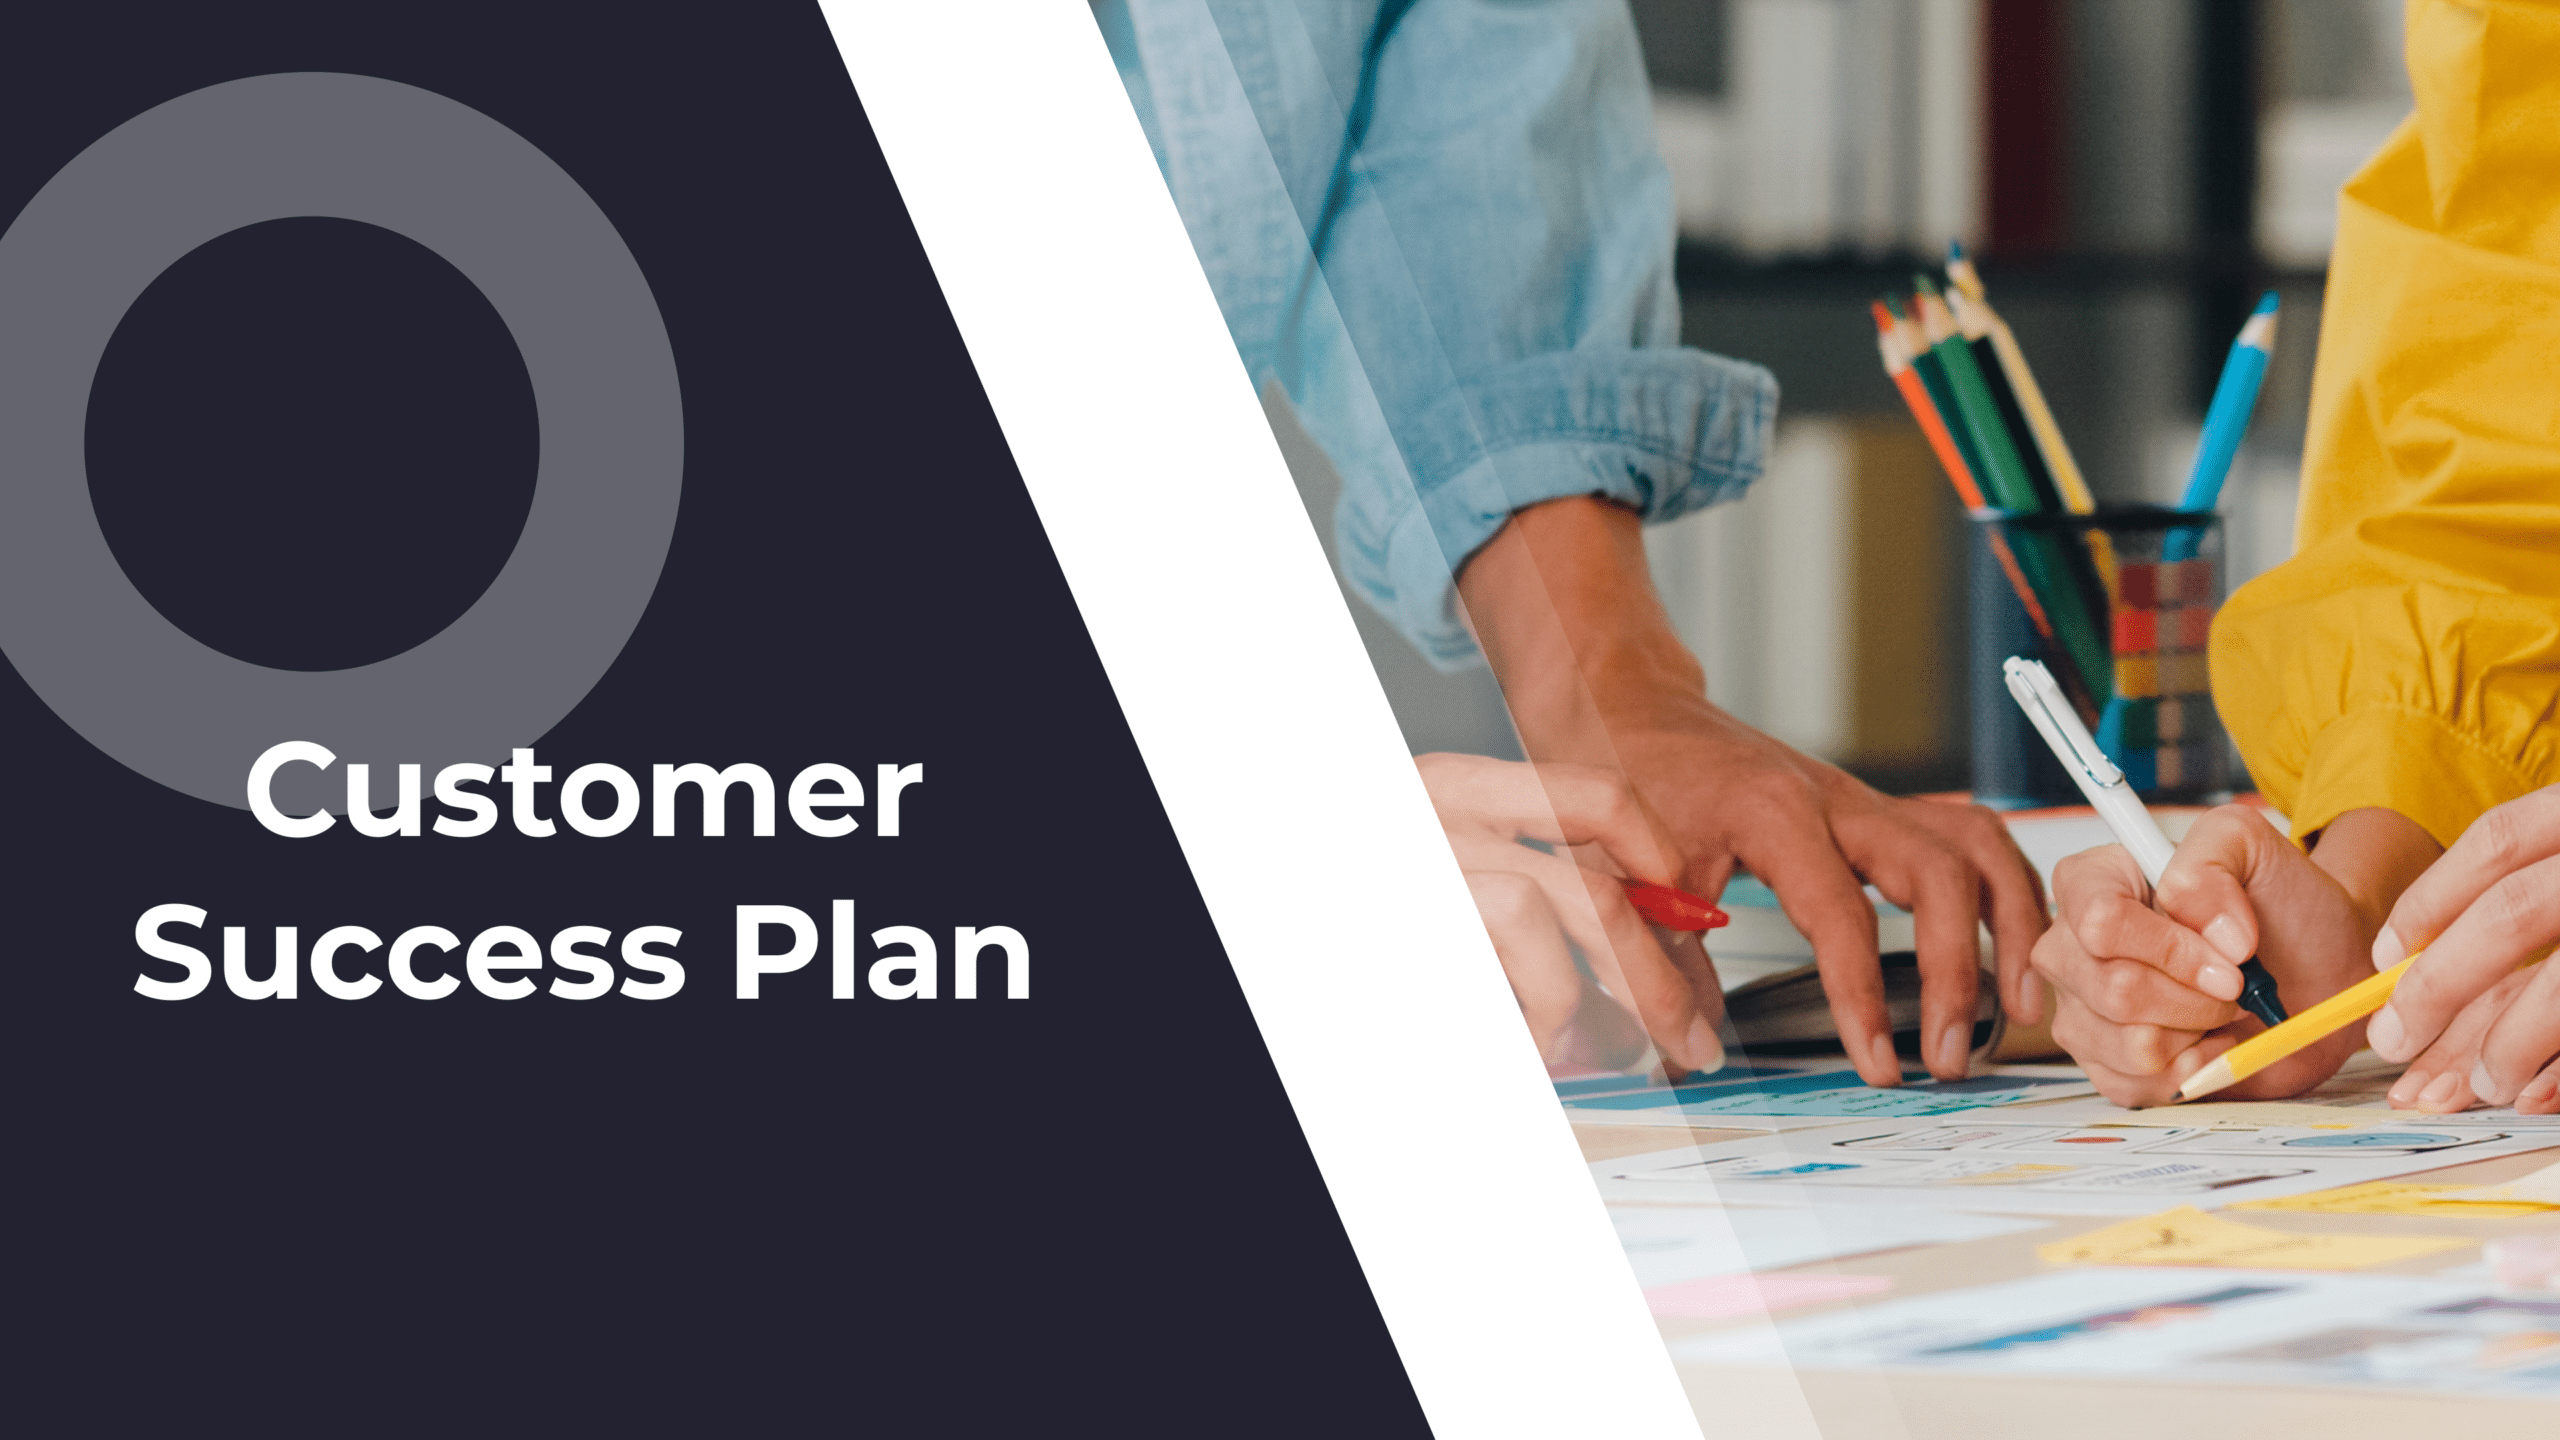 7 key elements for a winning customer success plan